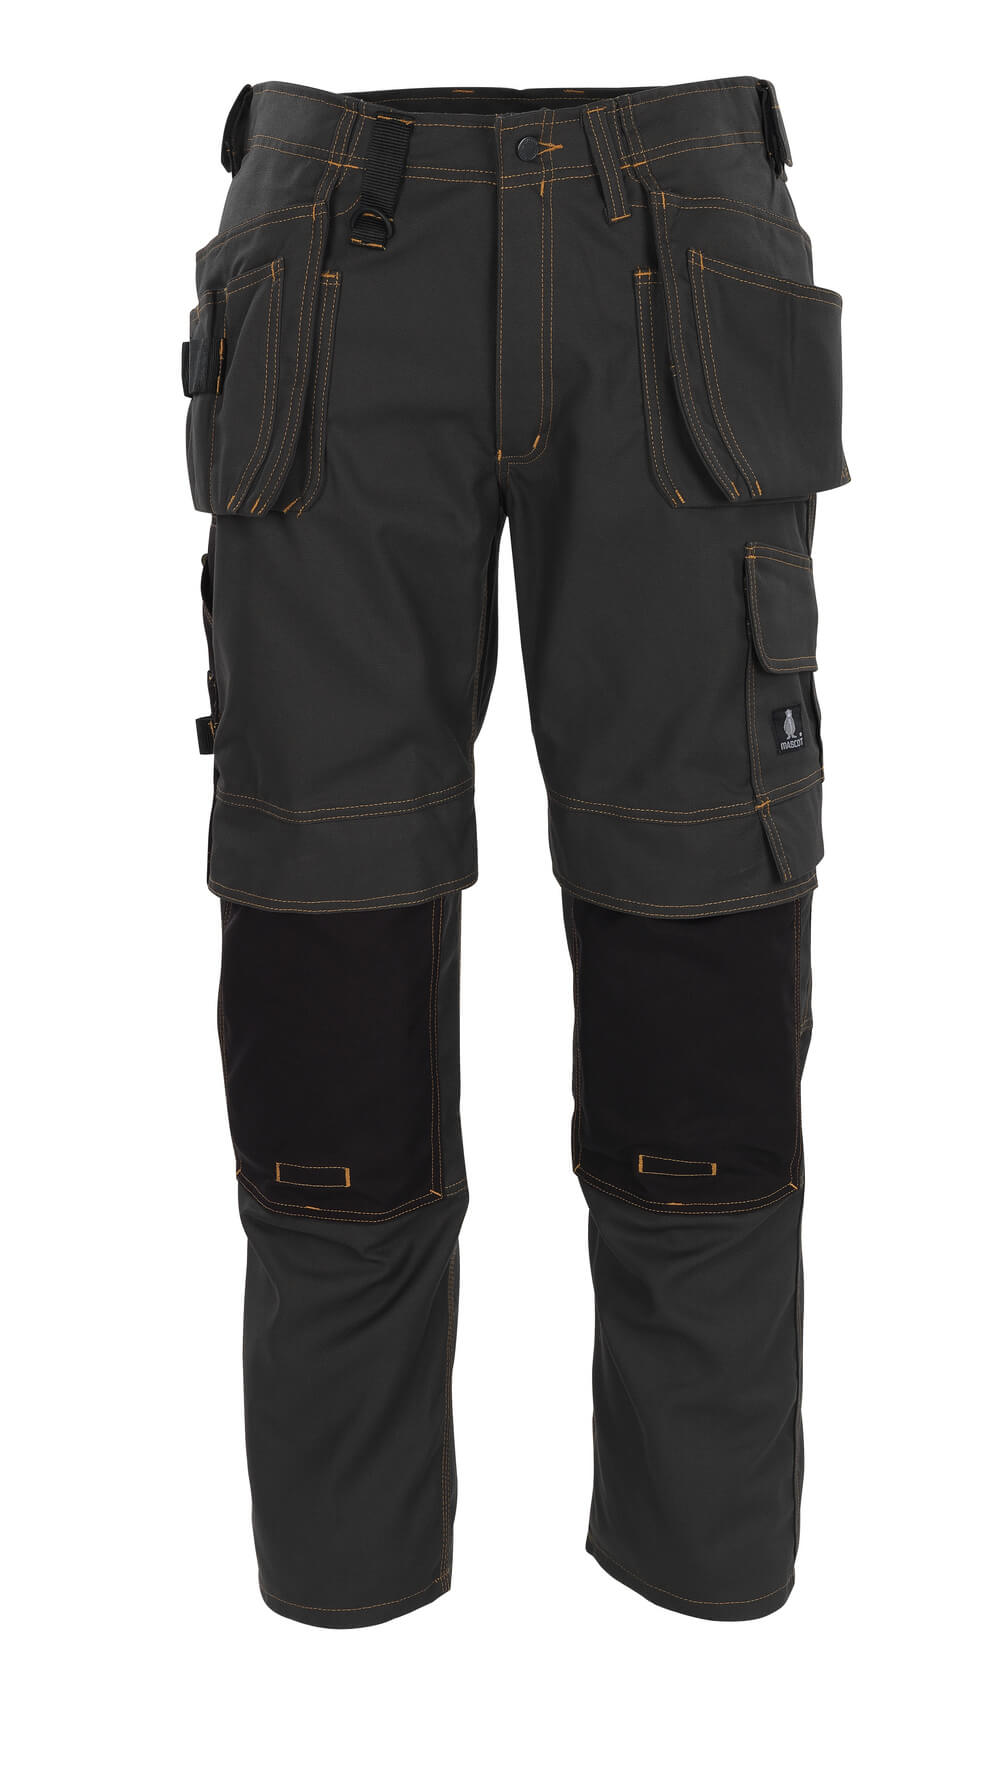 Blacksmith Men's Cargo Work Shorts - Khaki